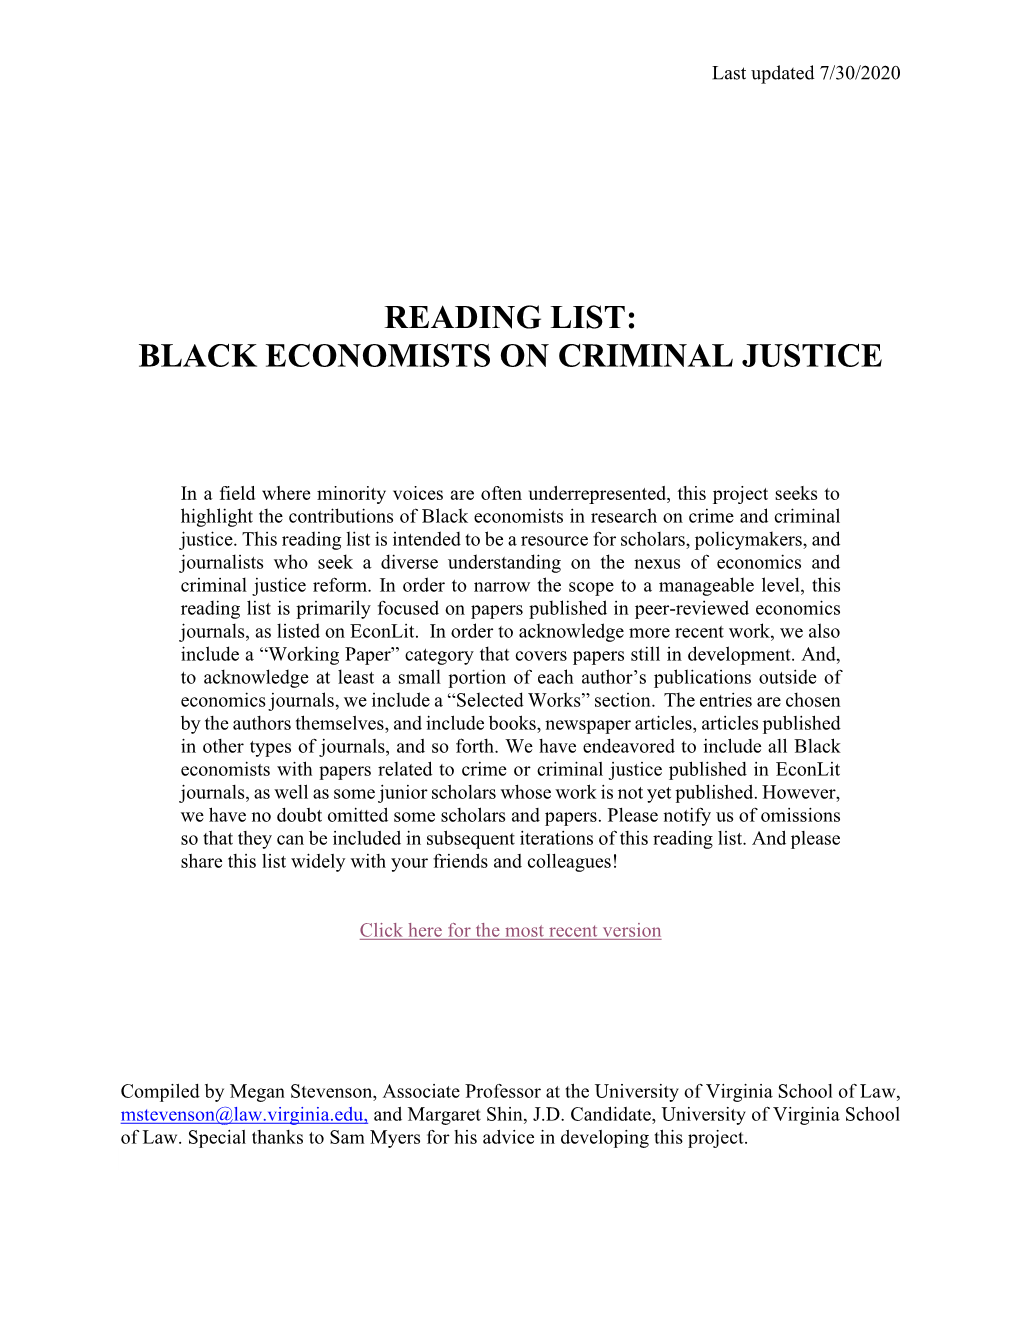 Black Economists on Criminal Justice